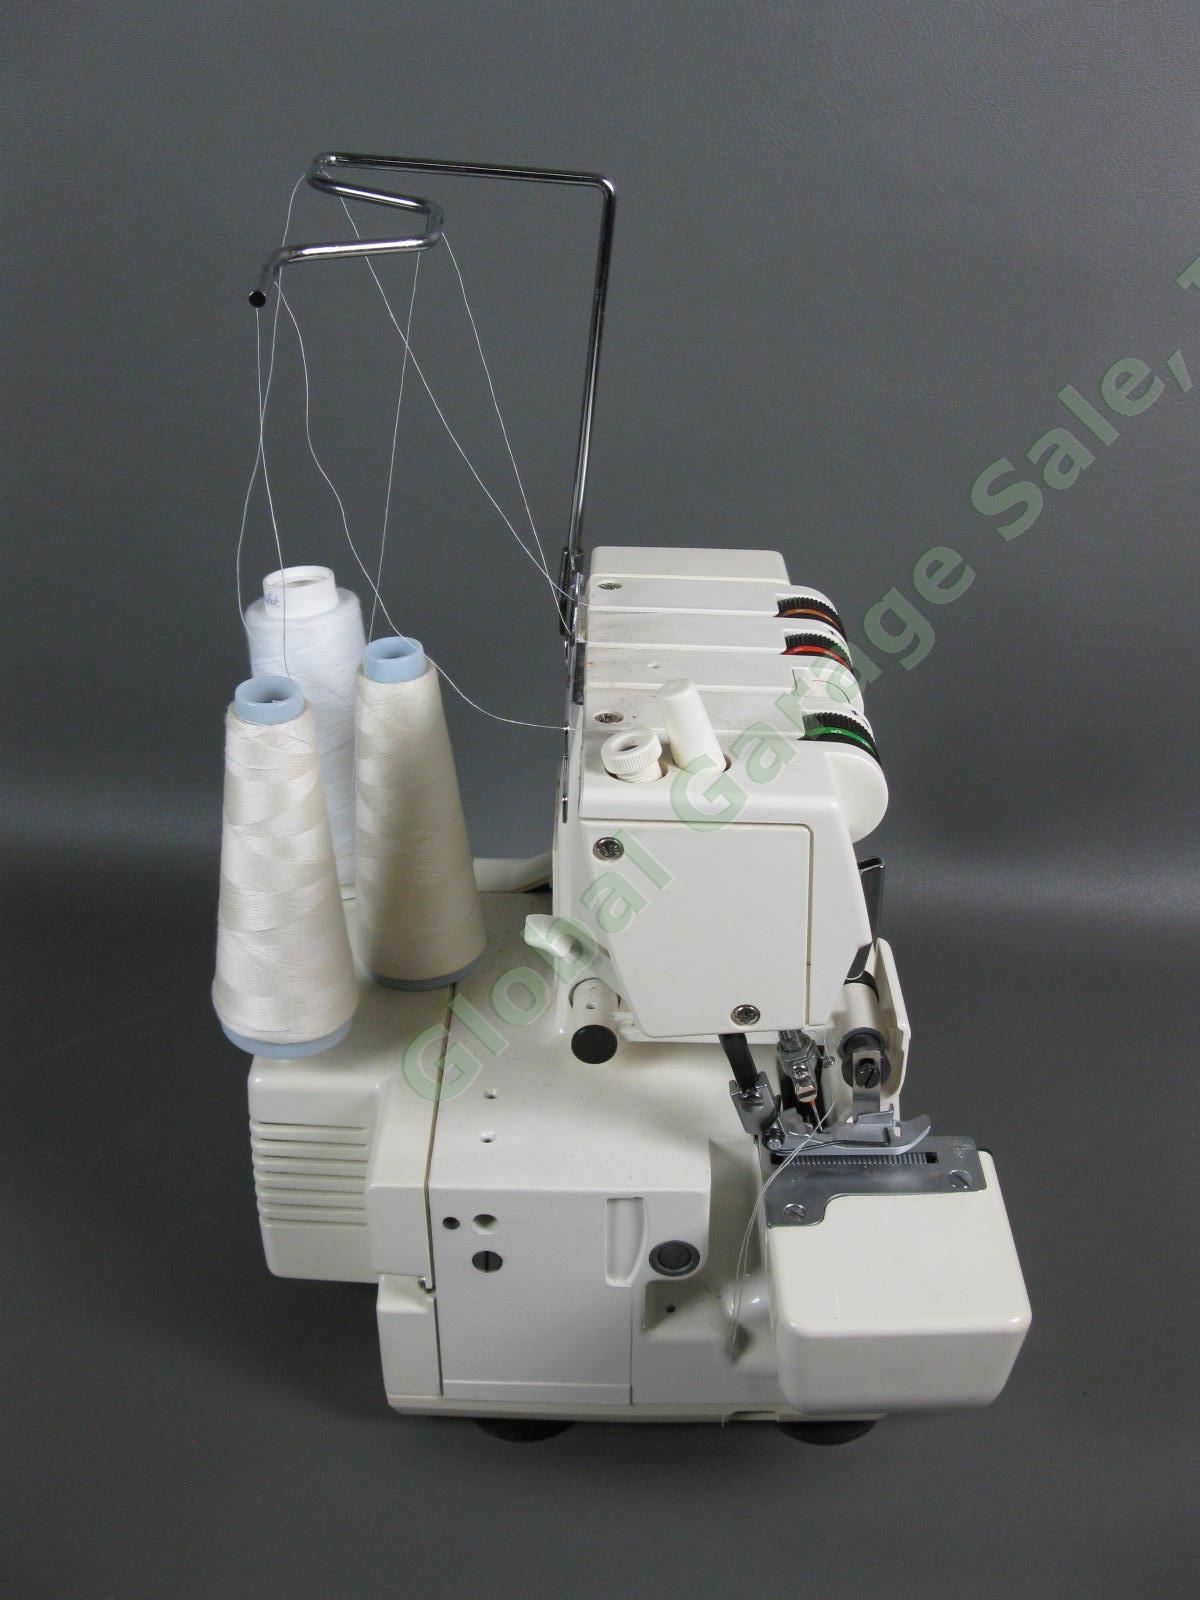 Singer Ultralock 14U32A Serger Sewing Machine Tested Runs Great Pedal Power Cord 3